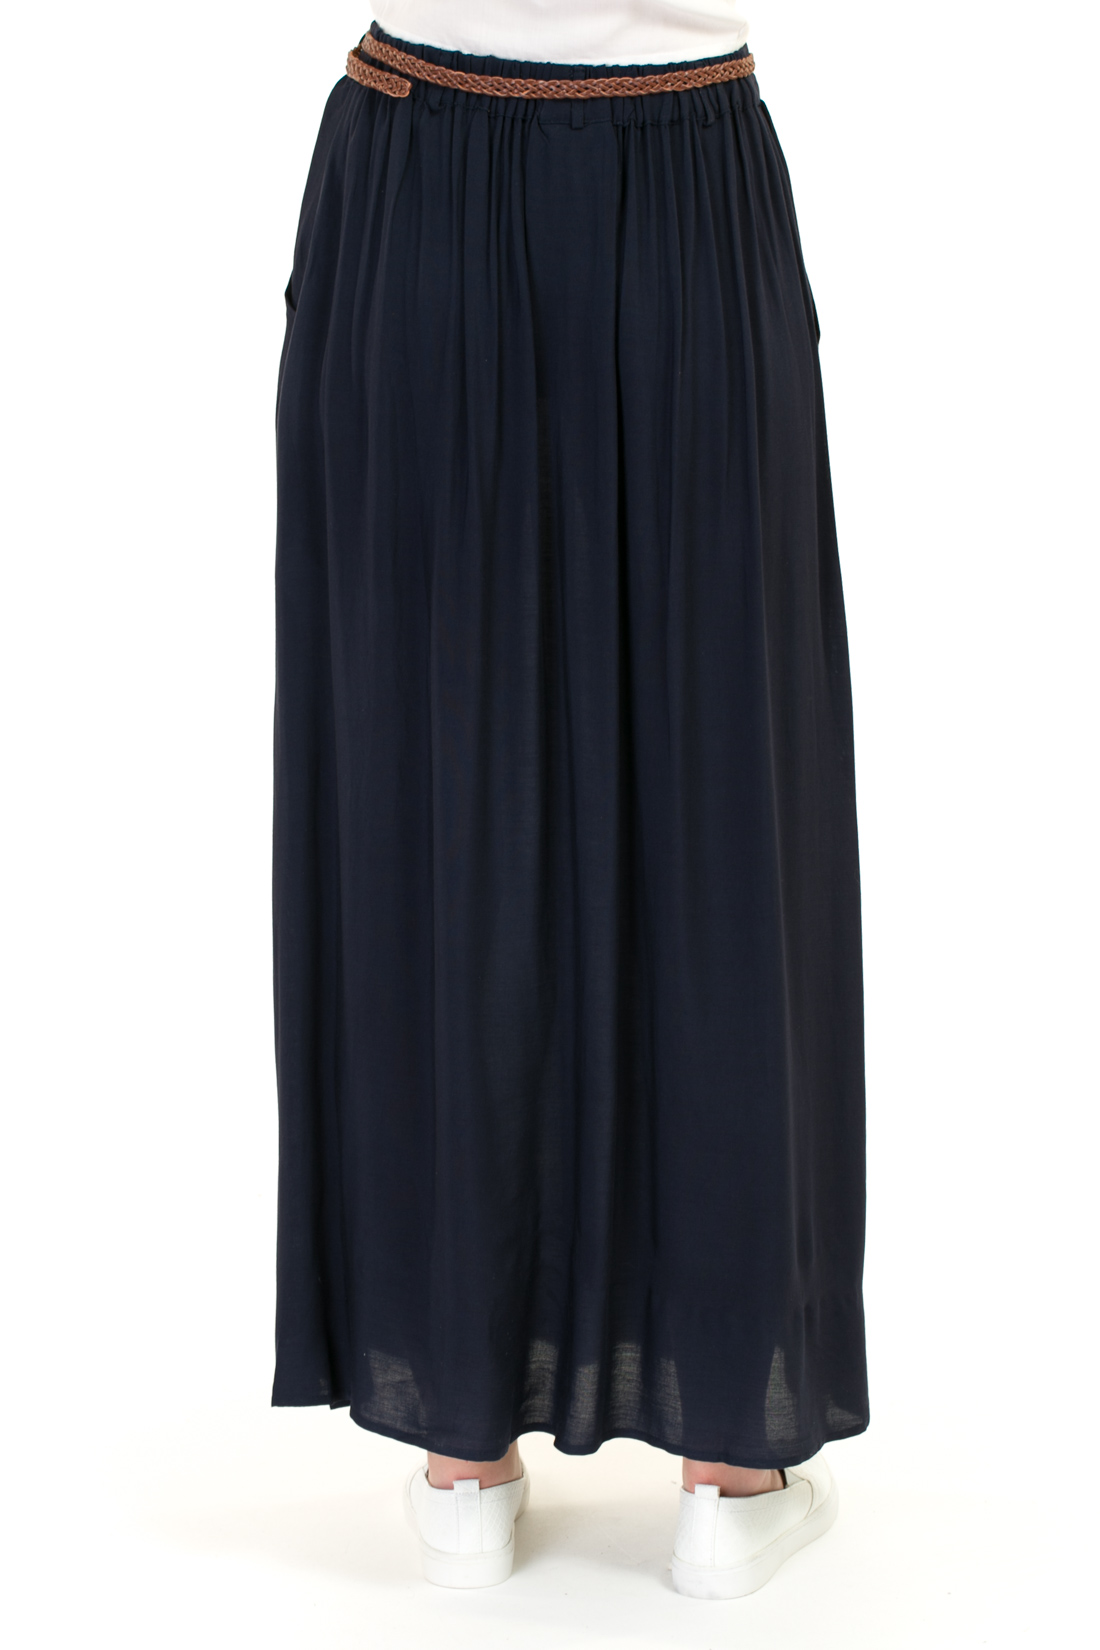 Длинная юбка с ремешком (арт. baon B477041), размер 3XL, цвет синий Длинная юбка с ремешком (арт. baon B477041) - фото 2